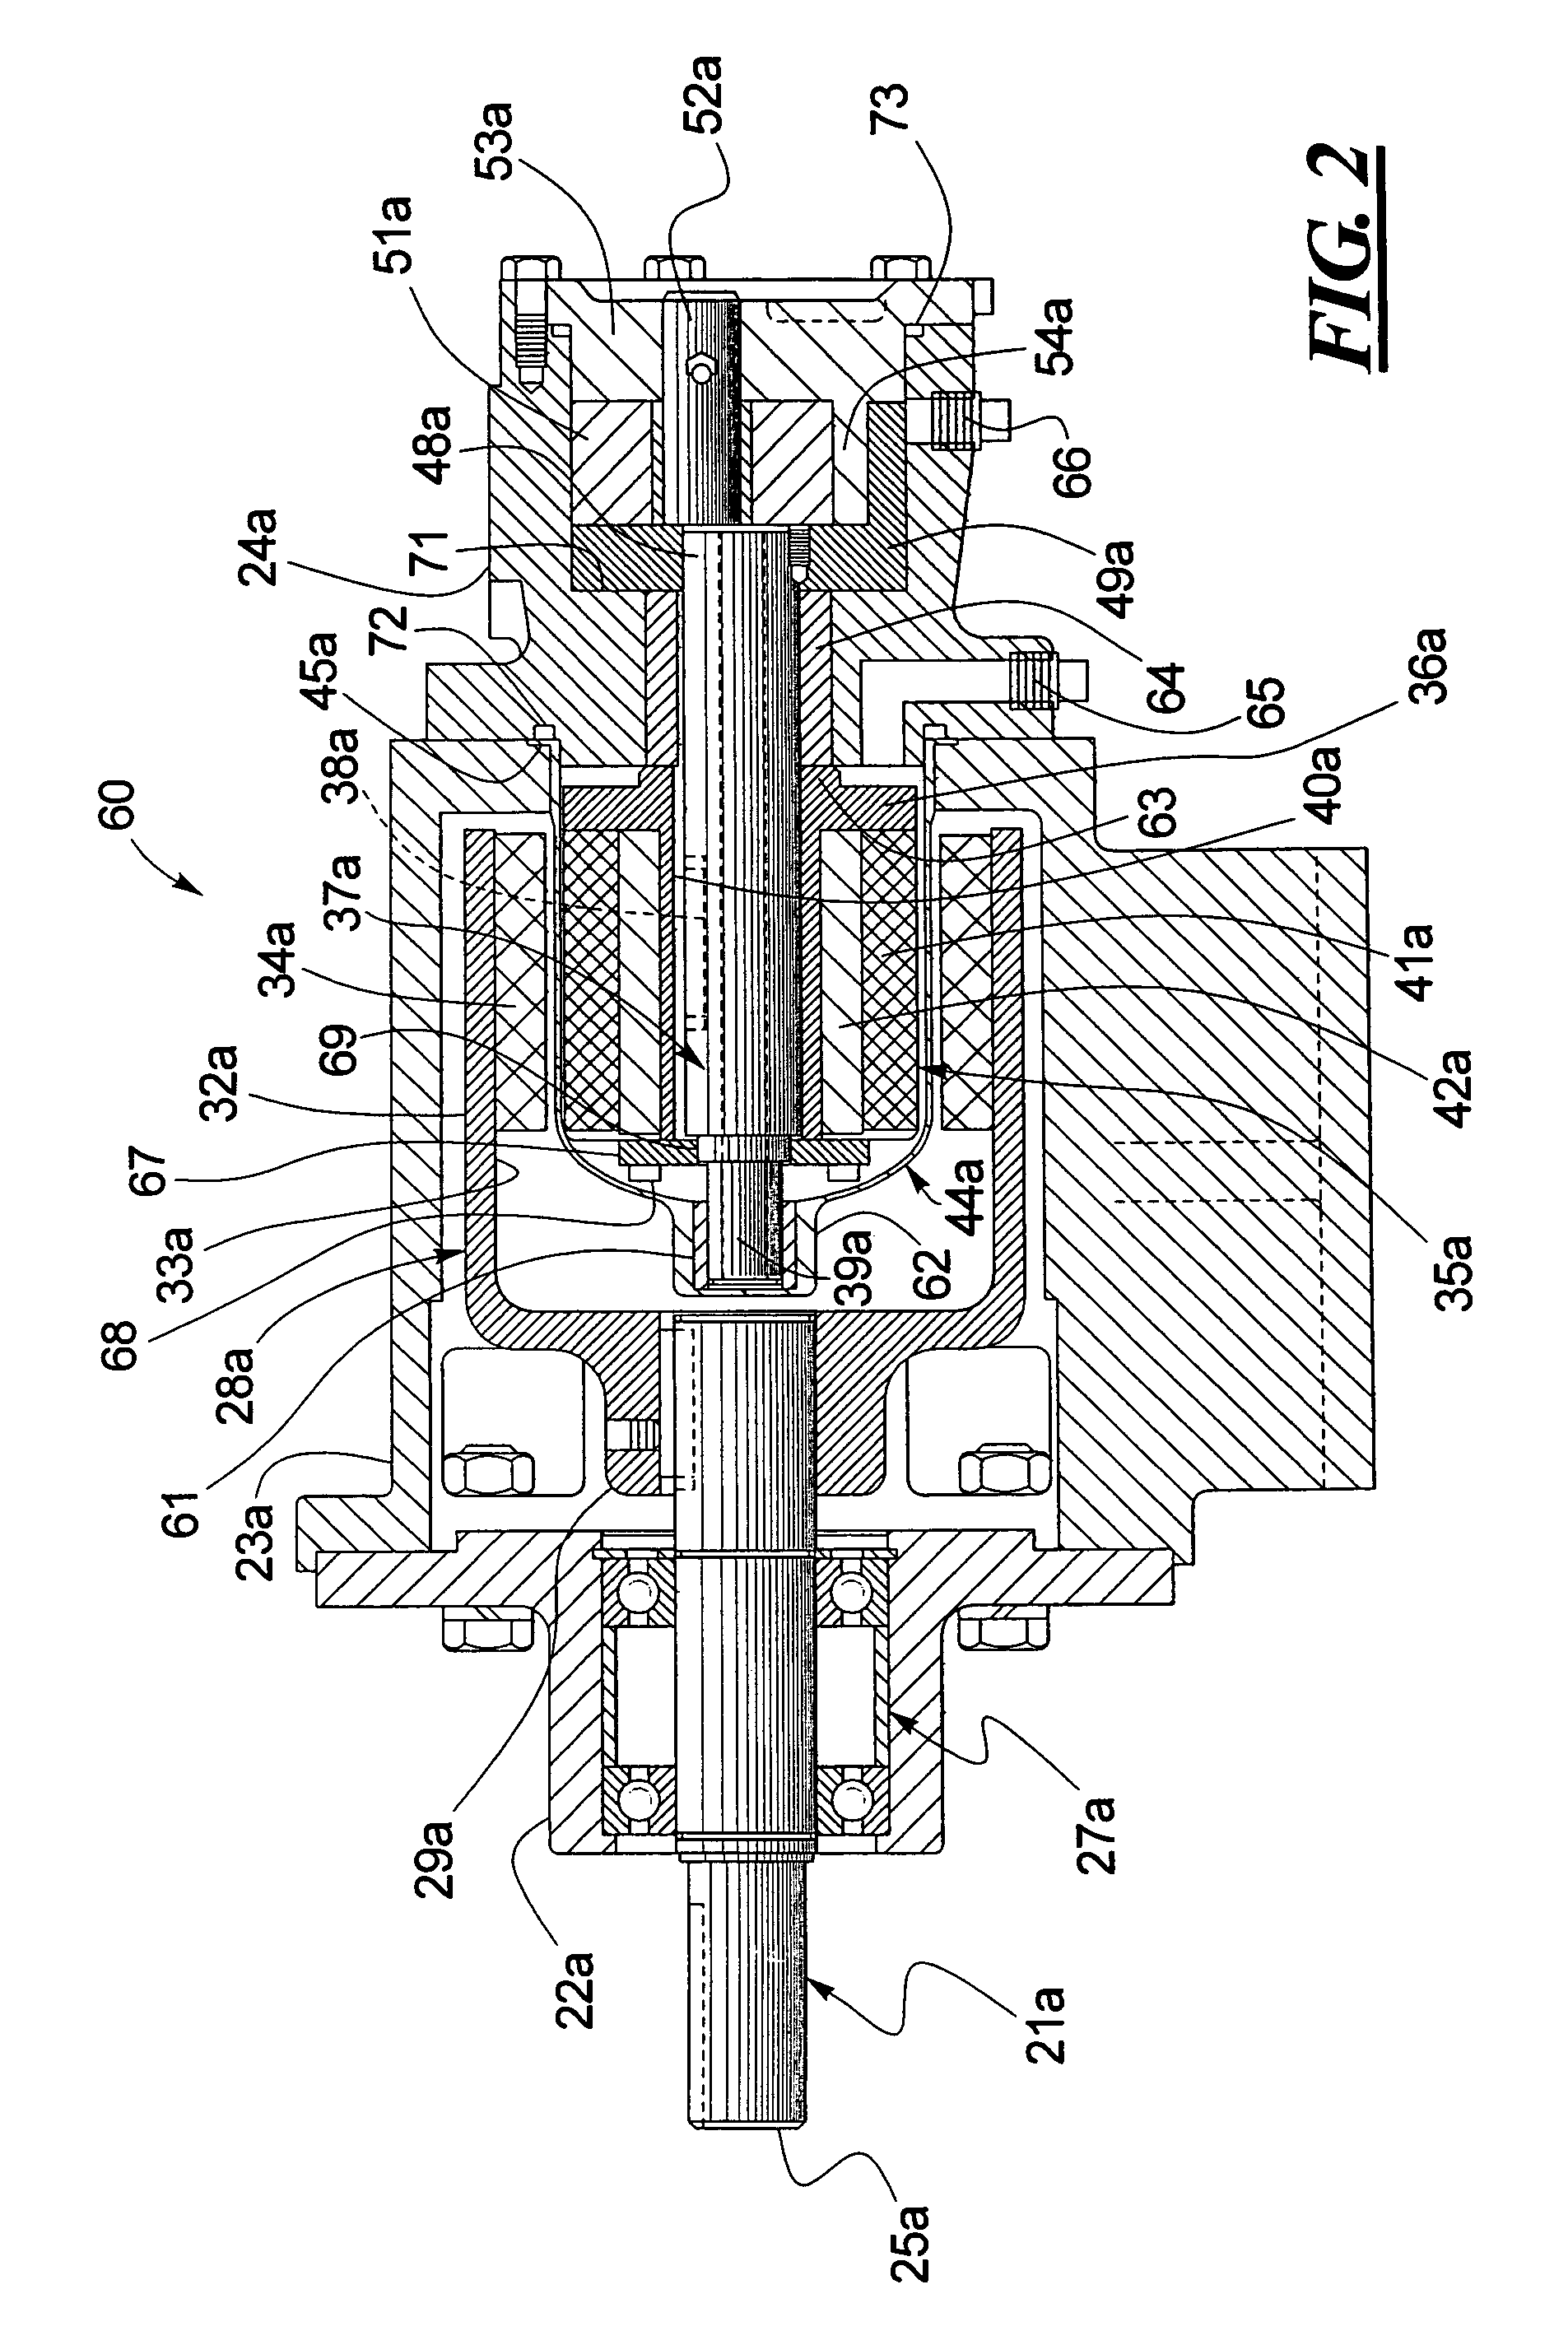 Rotor shaft bearing design and coupling mechanism